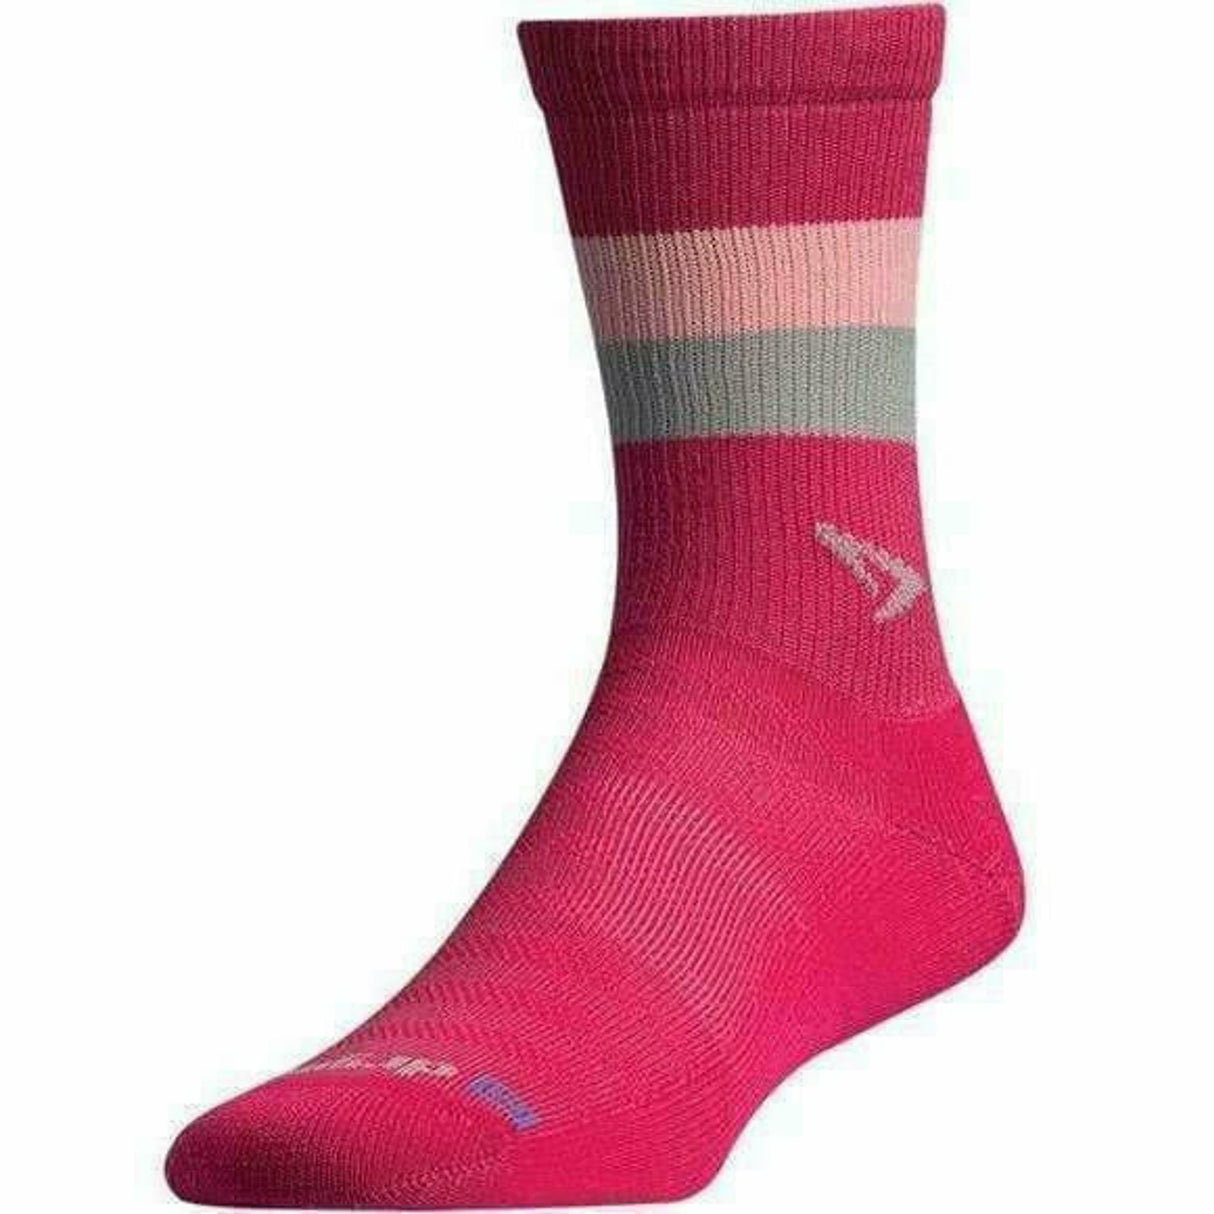 Drymax Running Lite-Mesh Crew Socks  -  Small / October Pink with Light Pink/Gray